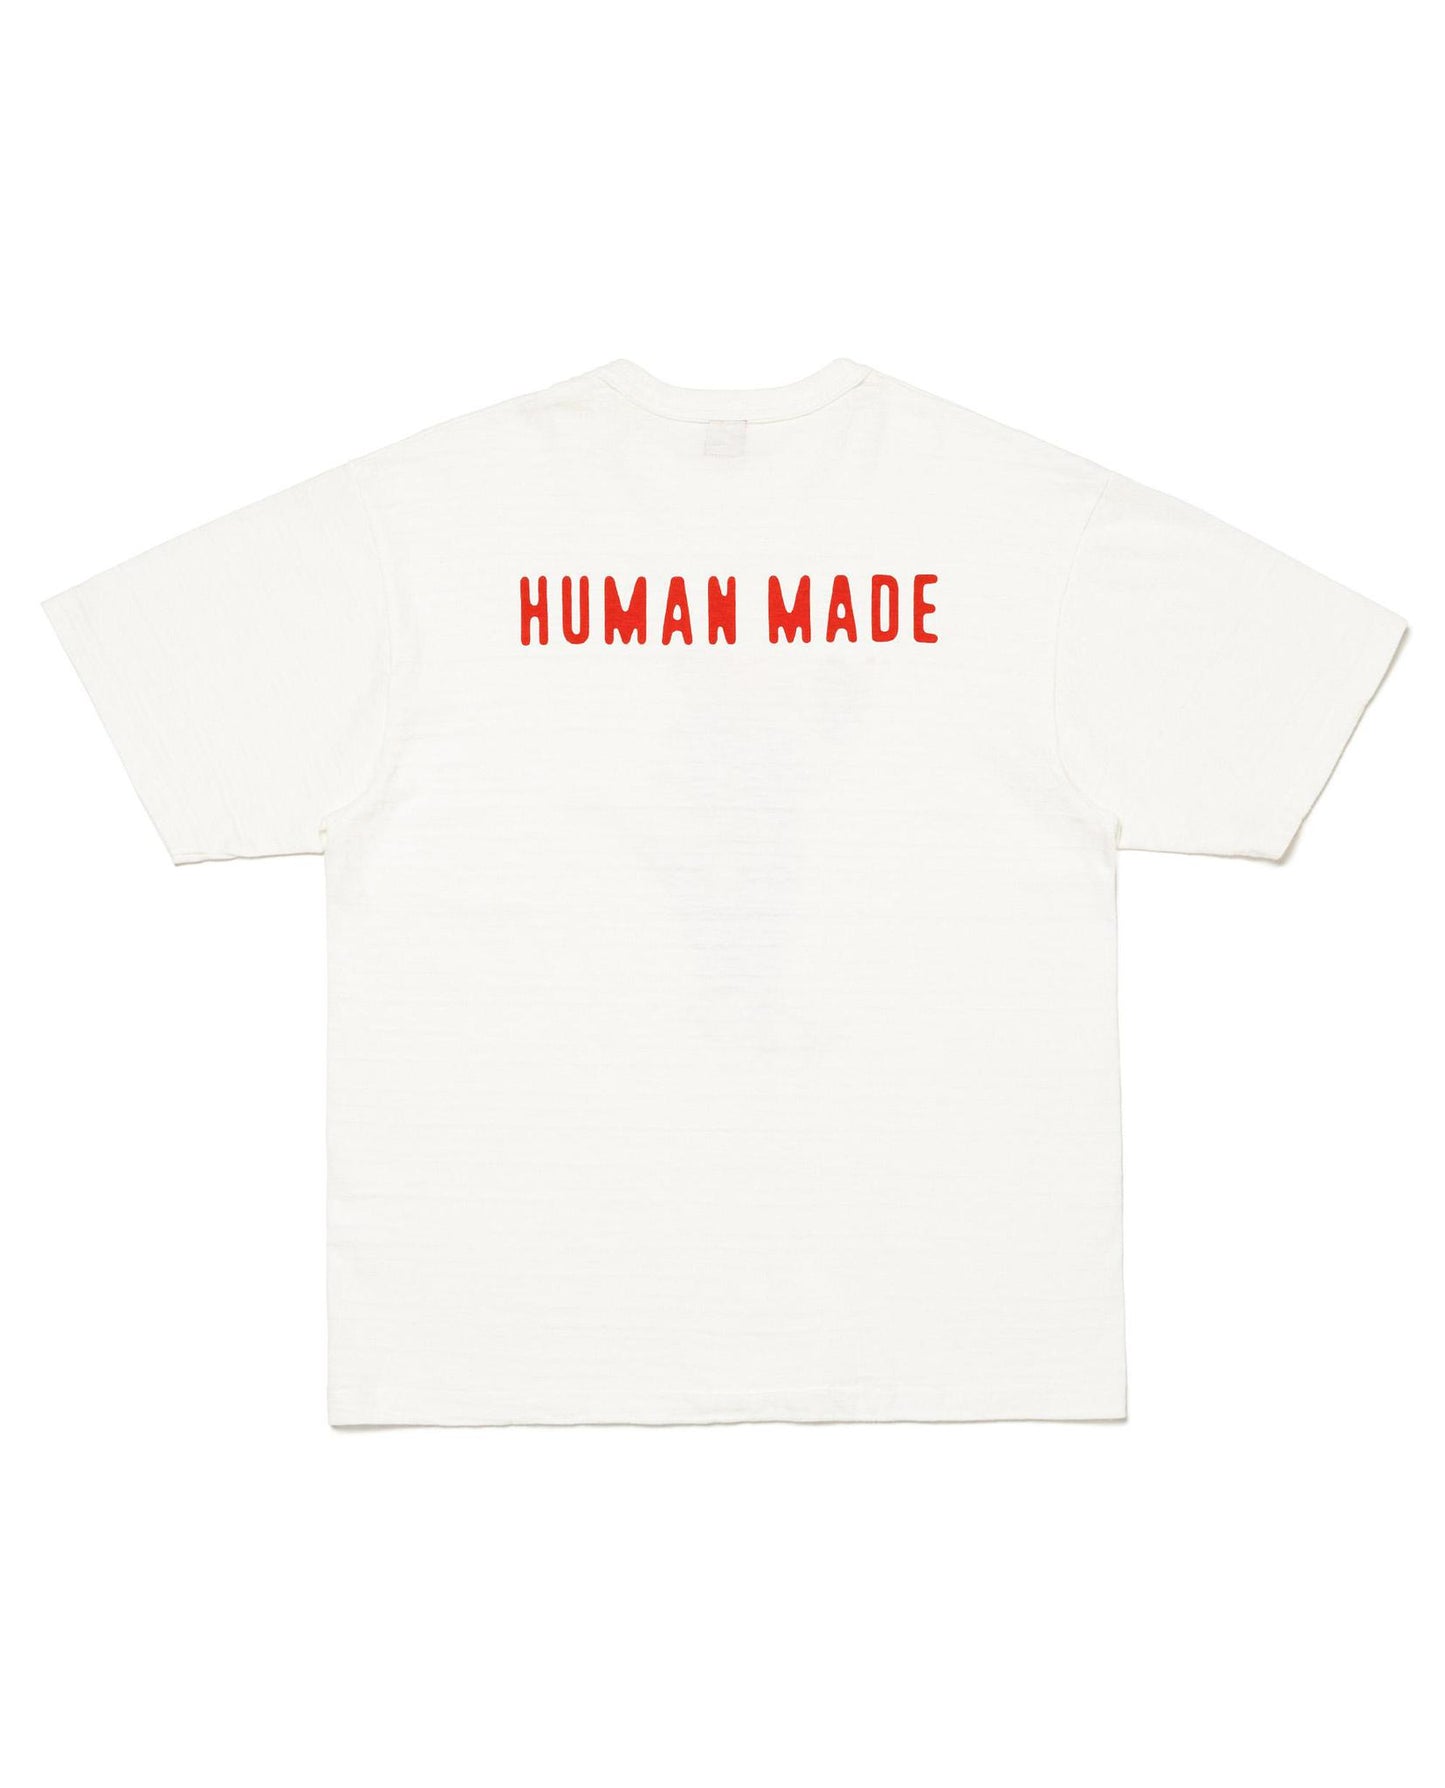 Human Made Graphic T-Shirt #1 | STASHED